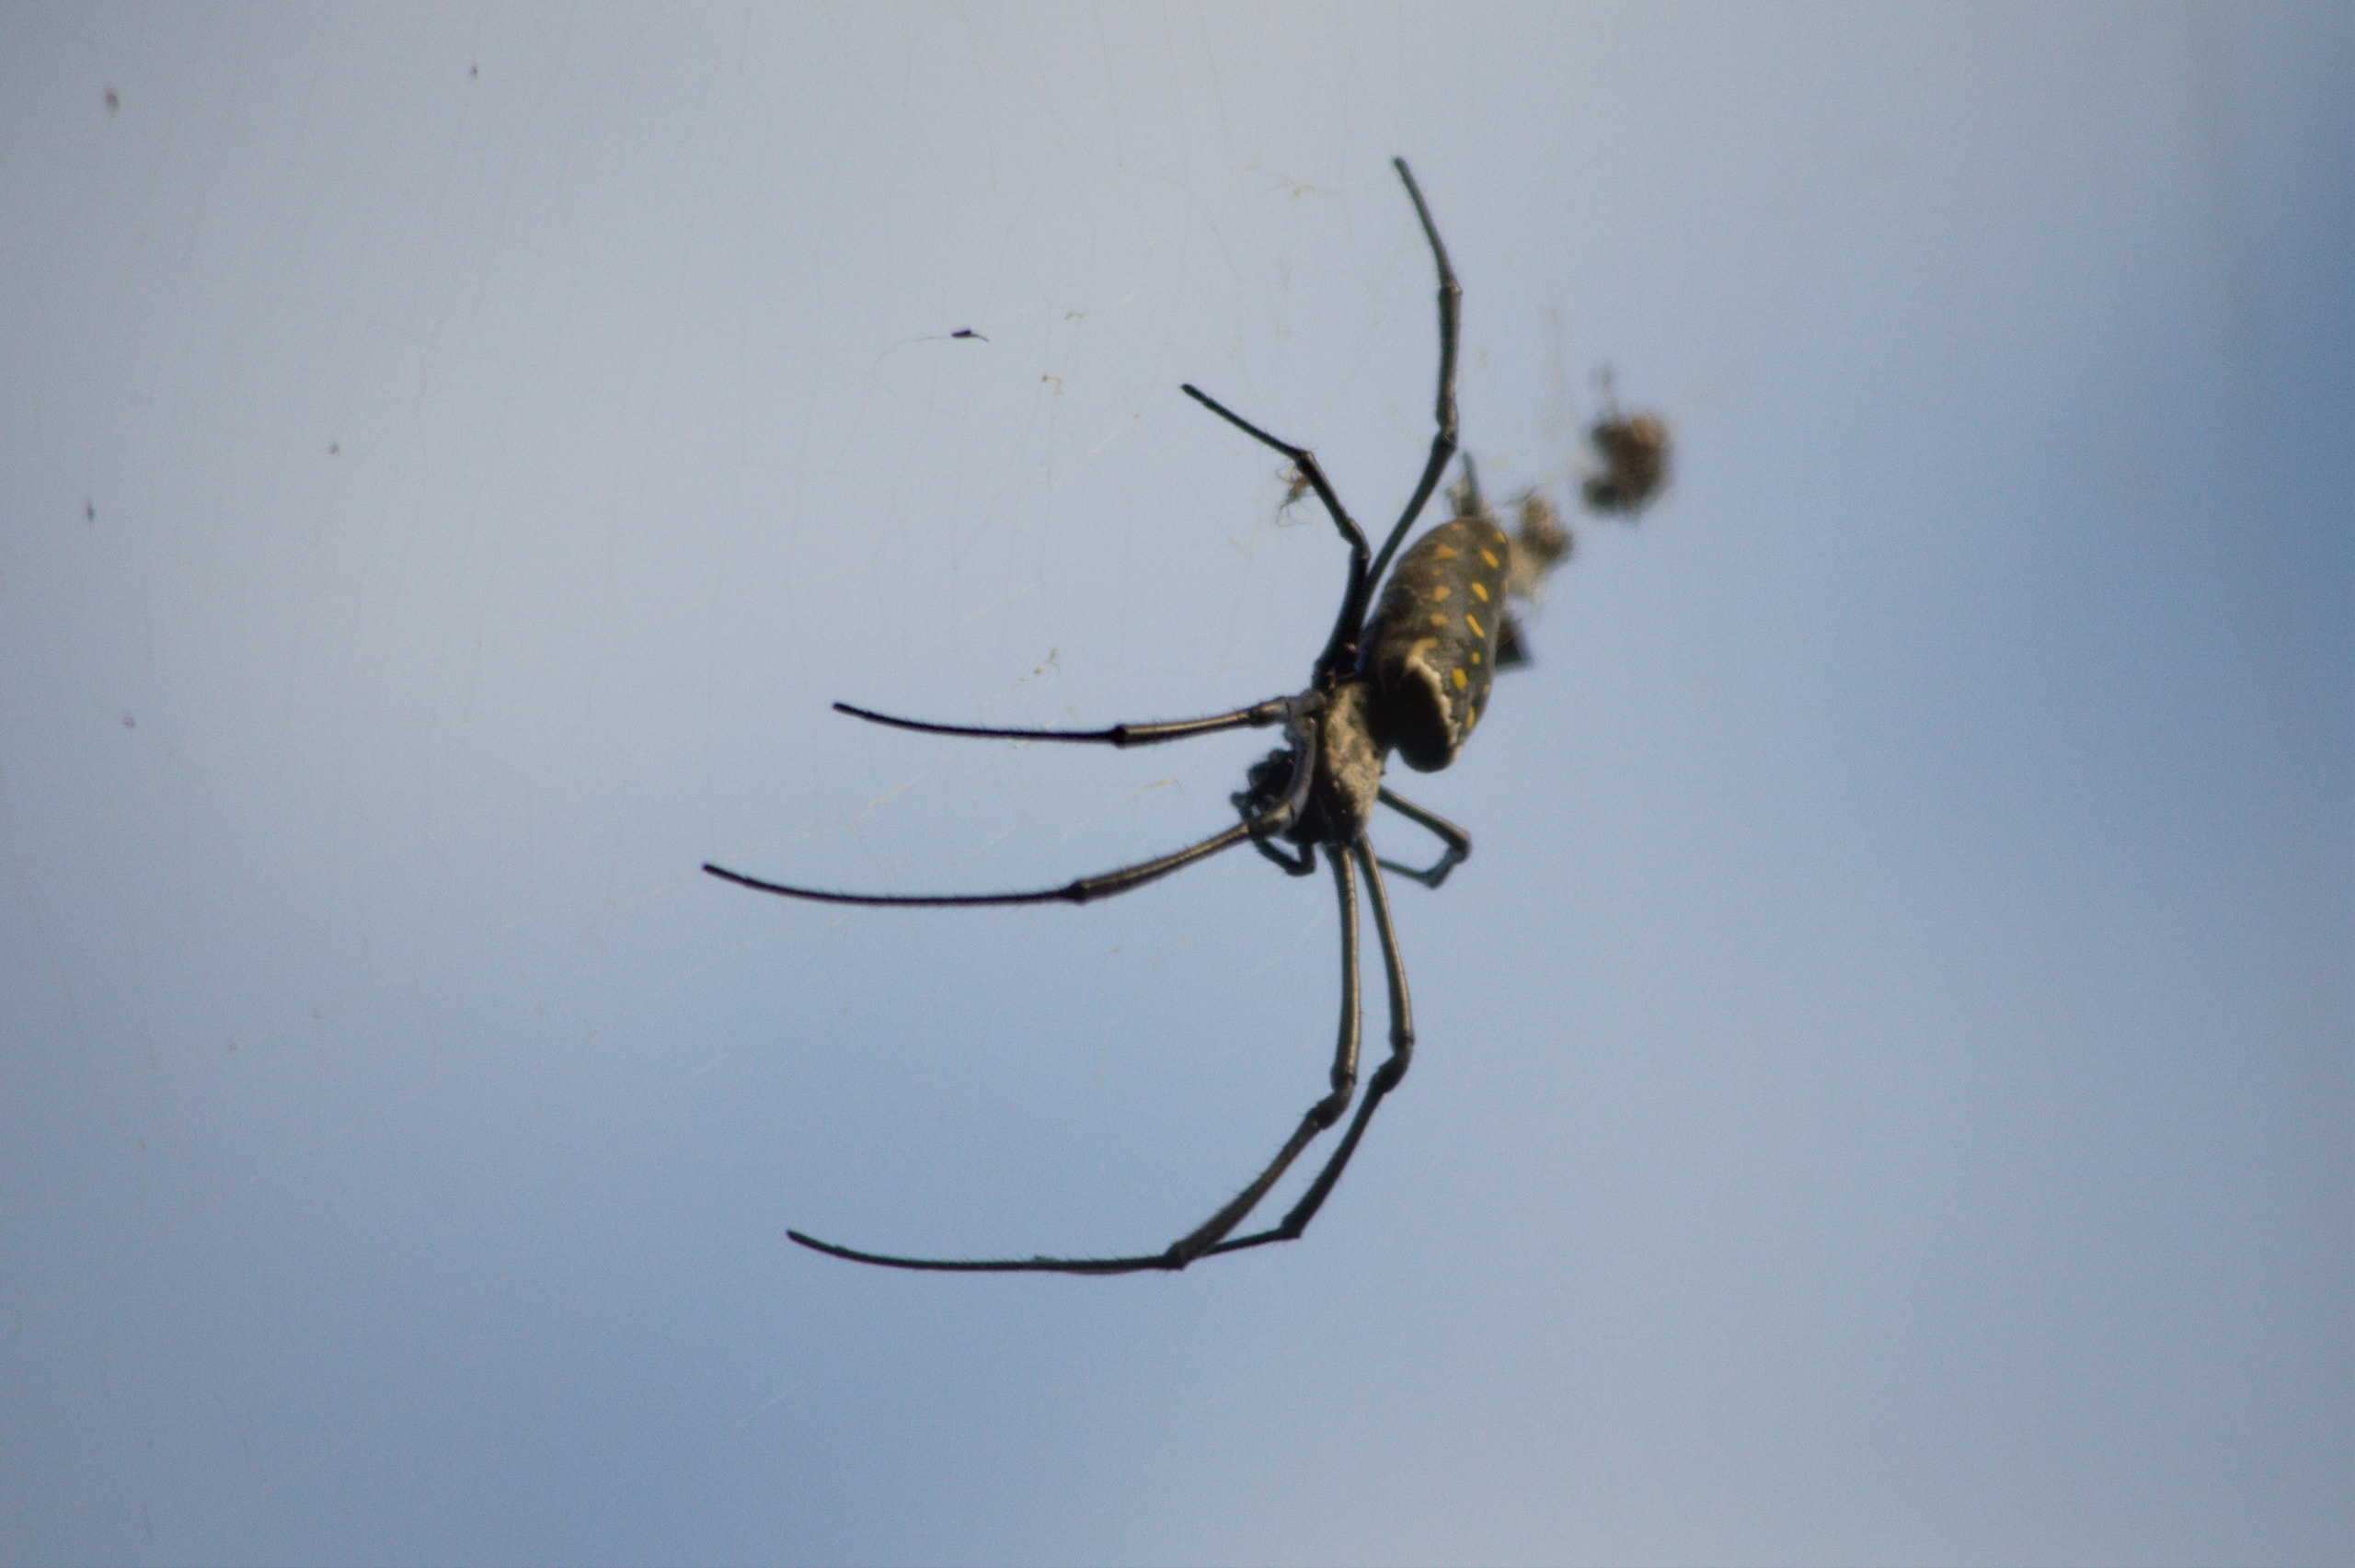 Picture of Trichonephila antipodiana (Batik Golden Web Spider) - Lateral